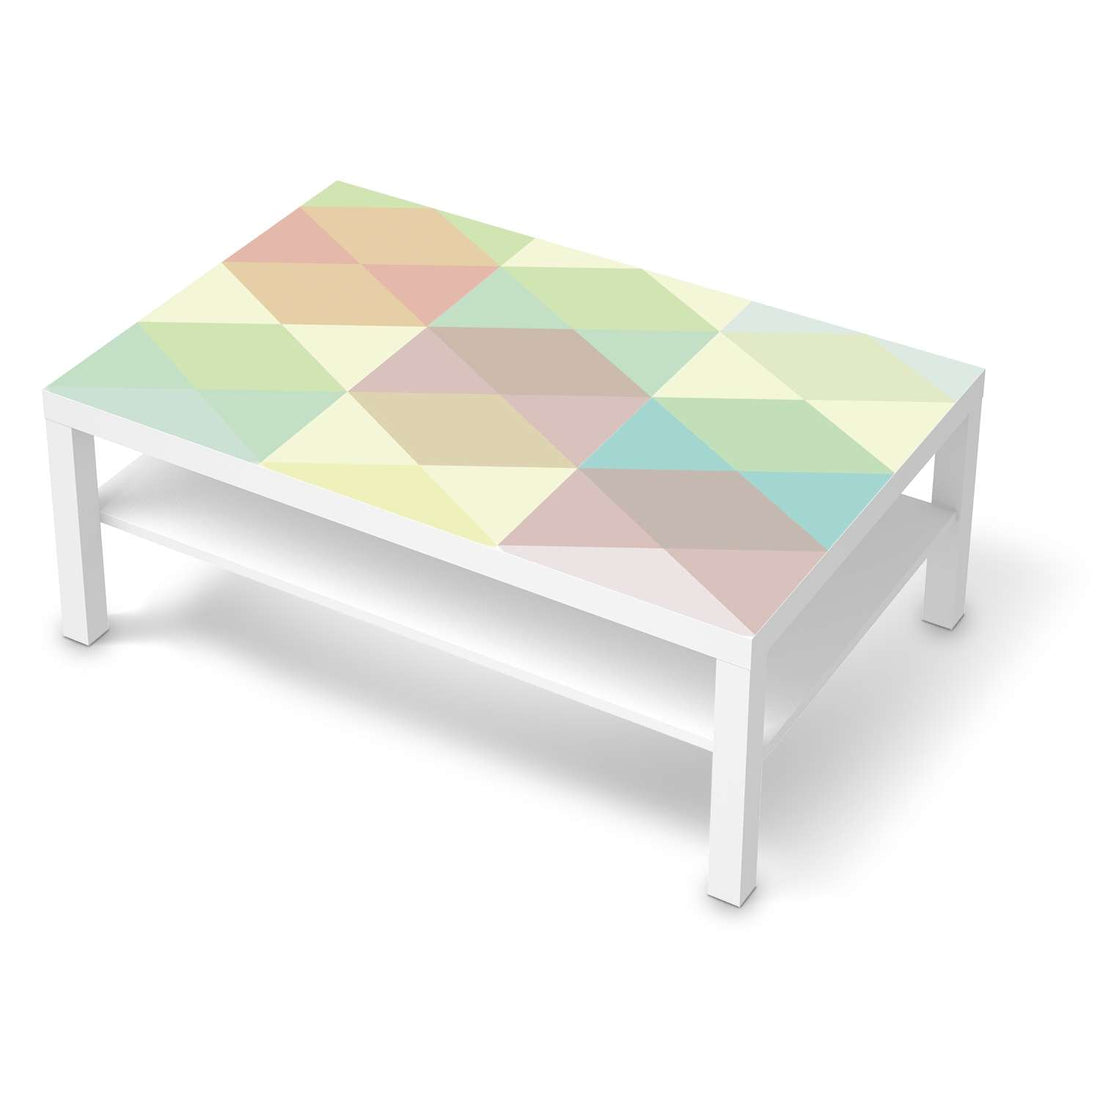 Klebefolie Melitta Pastell Geometrie - IKEA Lack Tisch 118x78 cm - weiss